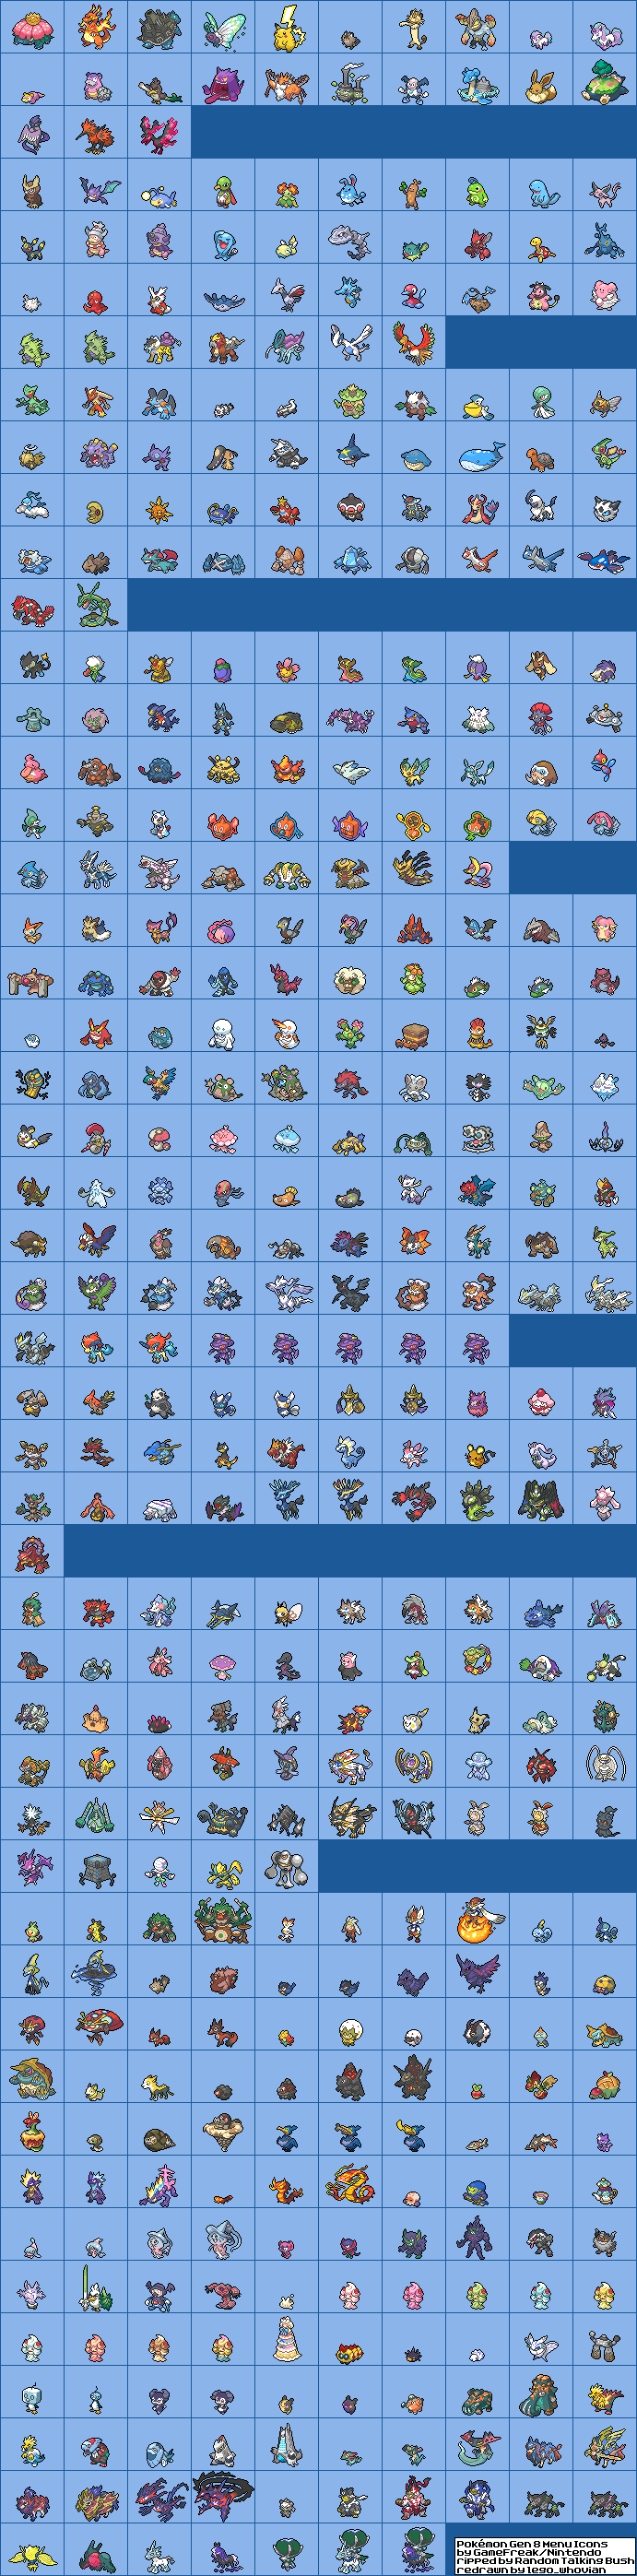 Custom / Edited - Pokémon Customs - Alolan Pokémon (R/G/B-Style) - The  Spriters Resource